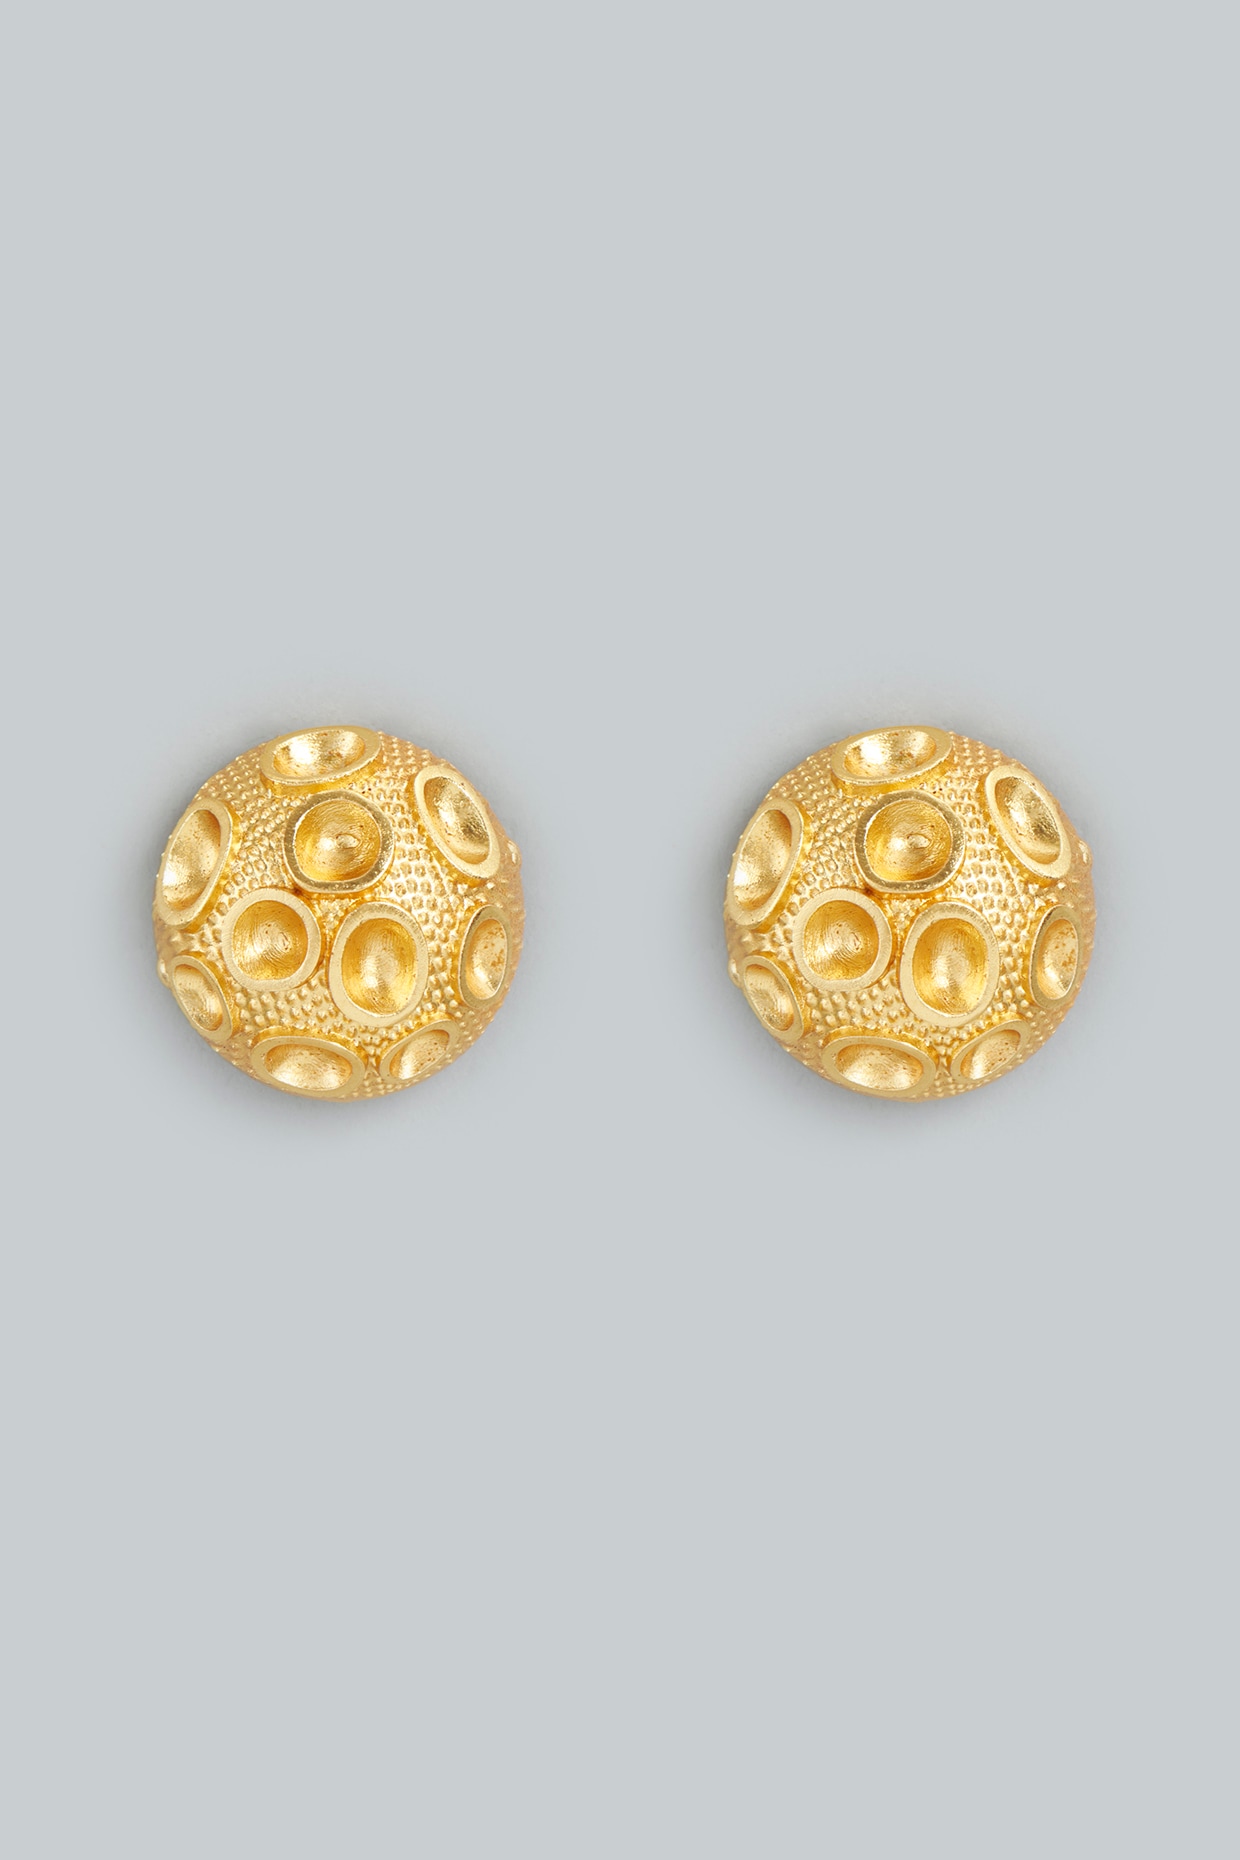 22k Gold big round kundan stud earrings photo | Gold jewelry indian, Gold  round earrings, Gold jewellery design necklaces